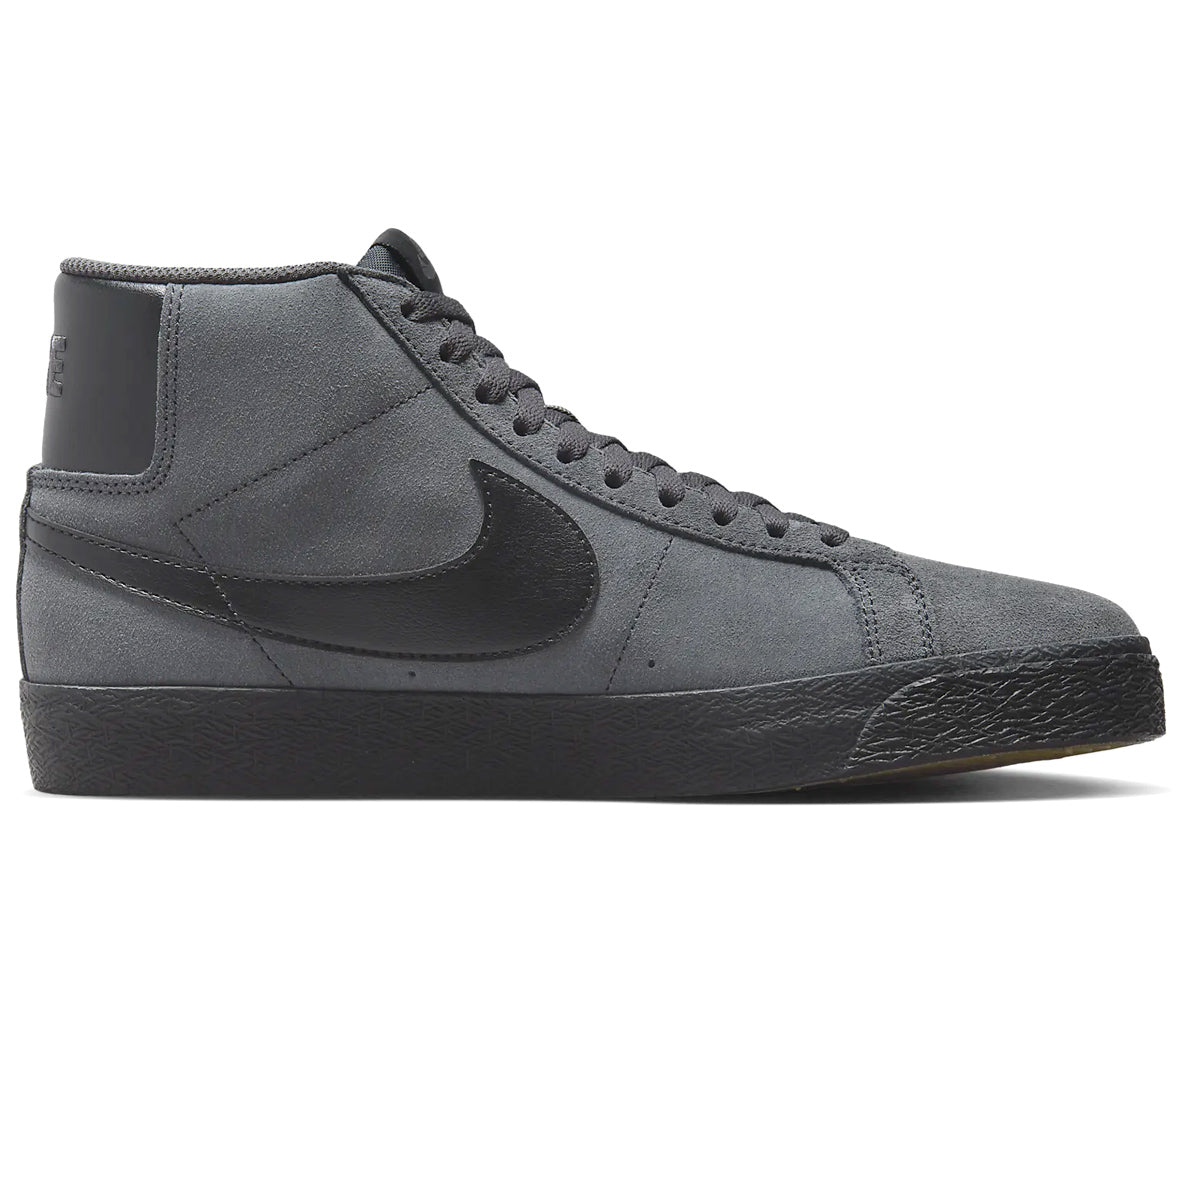 Nike SB Zoom Blazer Mid Shoes - Anthracite/Black/Anthracite/Black image 1